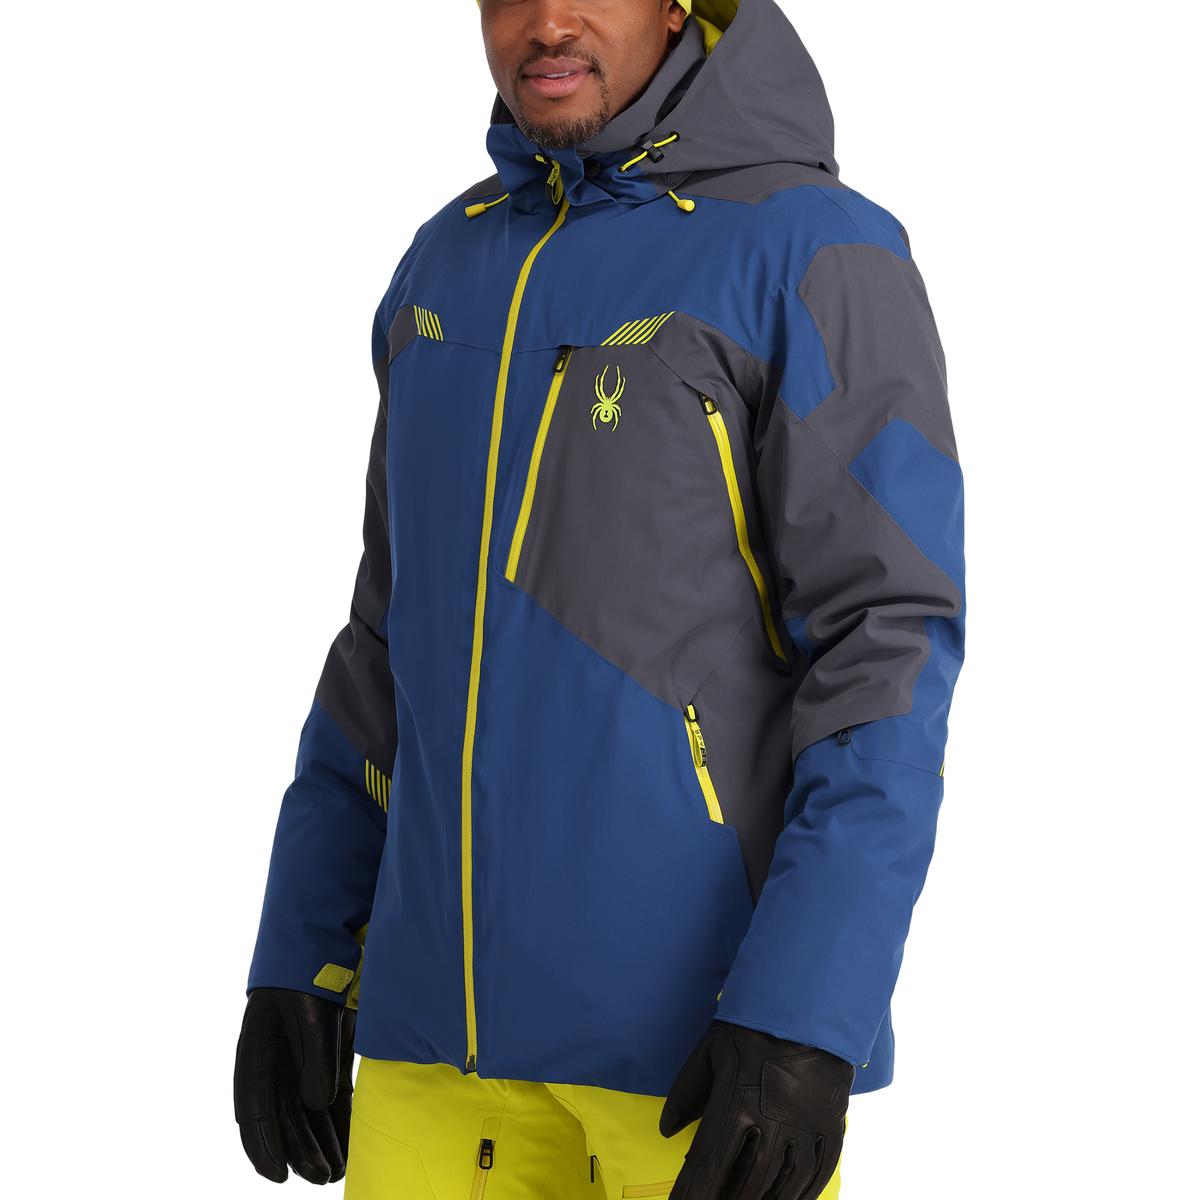 Spyder Mens Leader Ski Jacket, Price Match + 3-Year Warranty